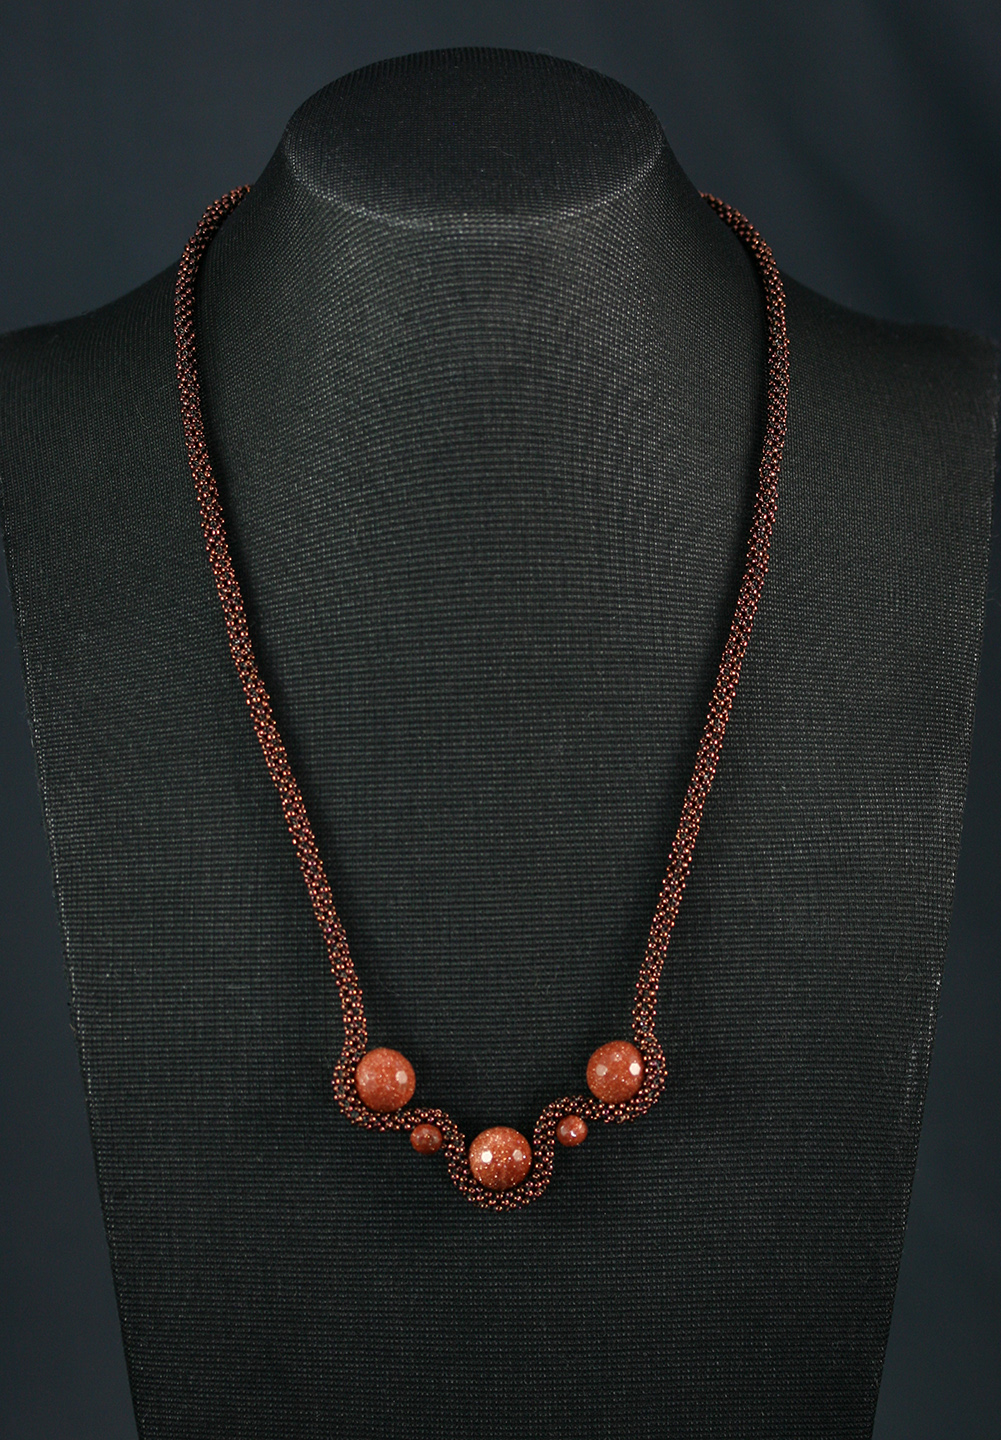 Goldstone Wave Necklace – Pretty Shiny Beads